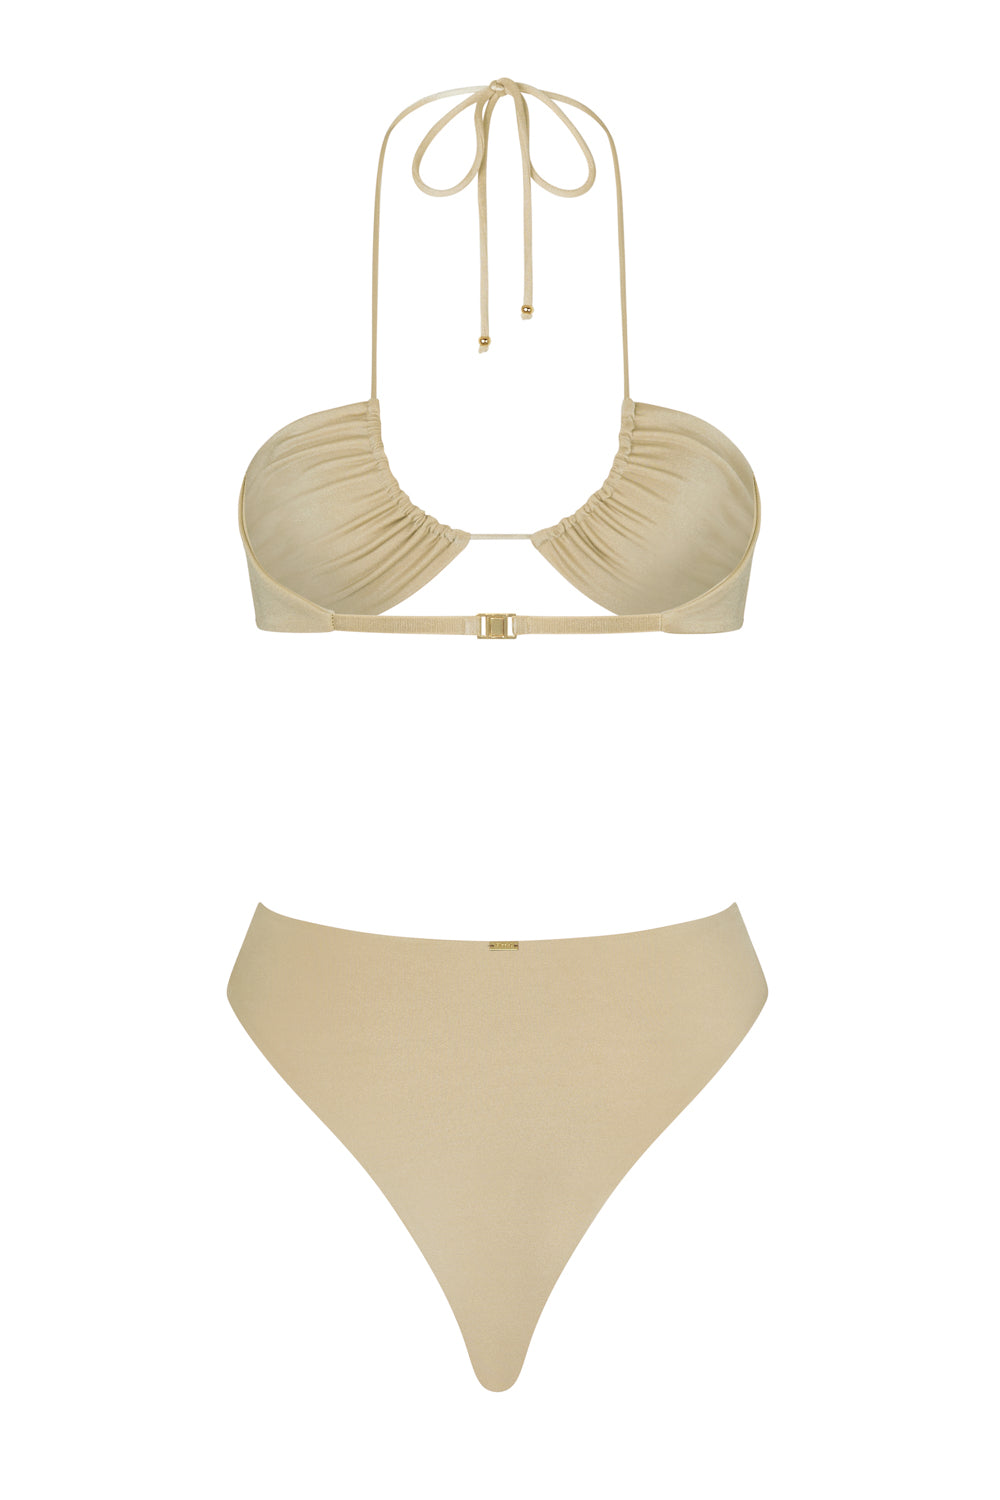 flook the label malani top analia brief swimwear gold product image back